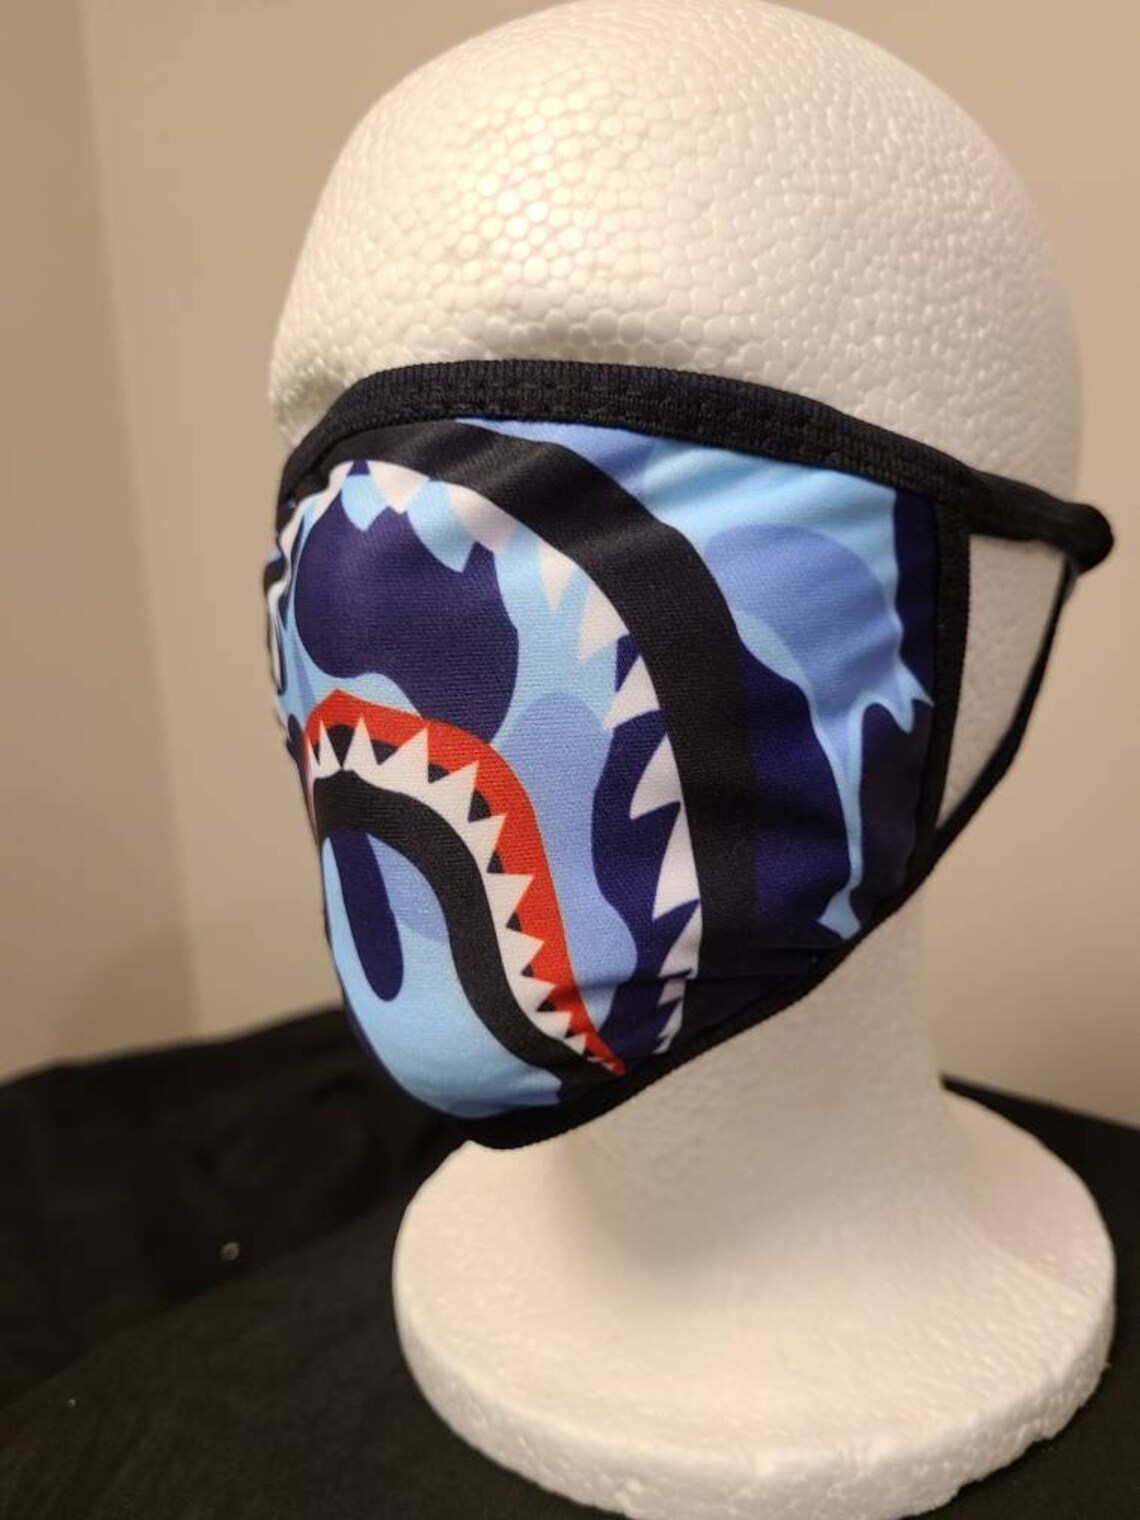 Rep Yo Squad Blue Camo Shark Bite face mask face covering